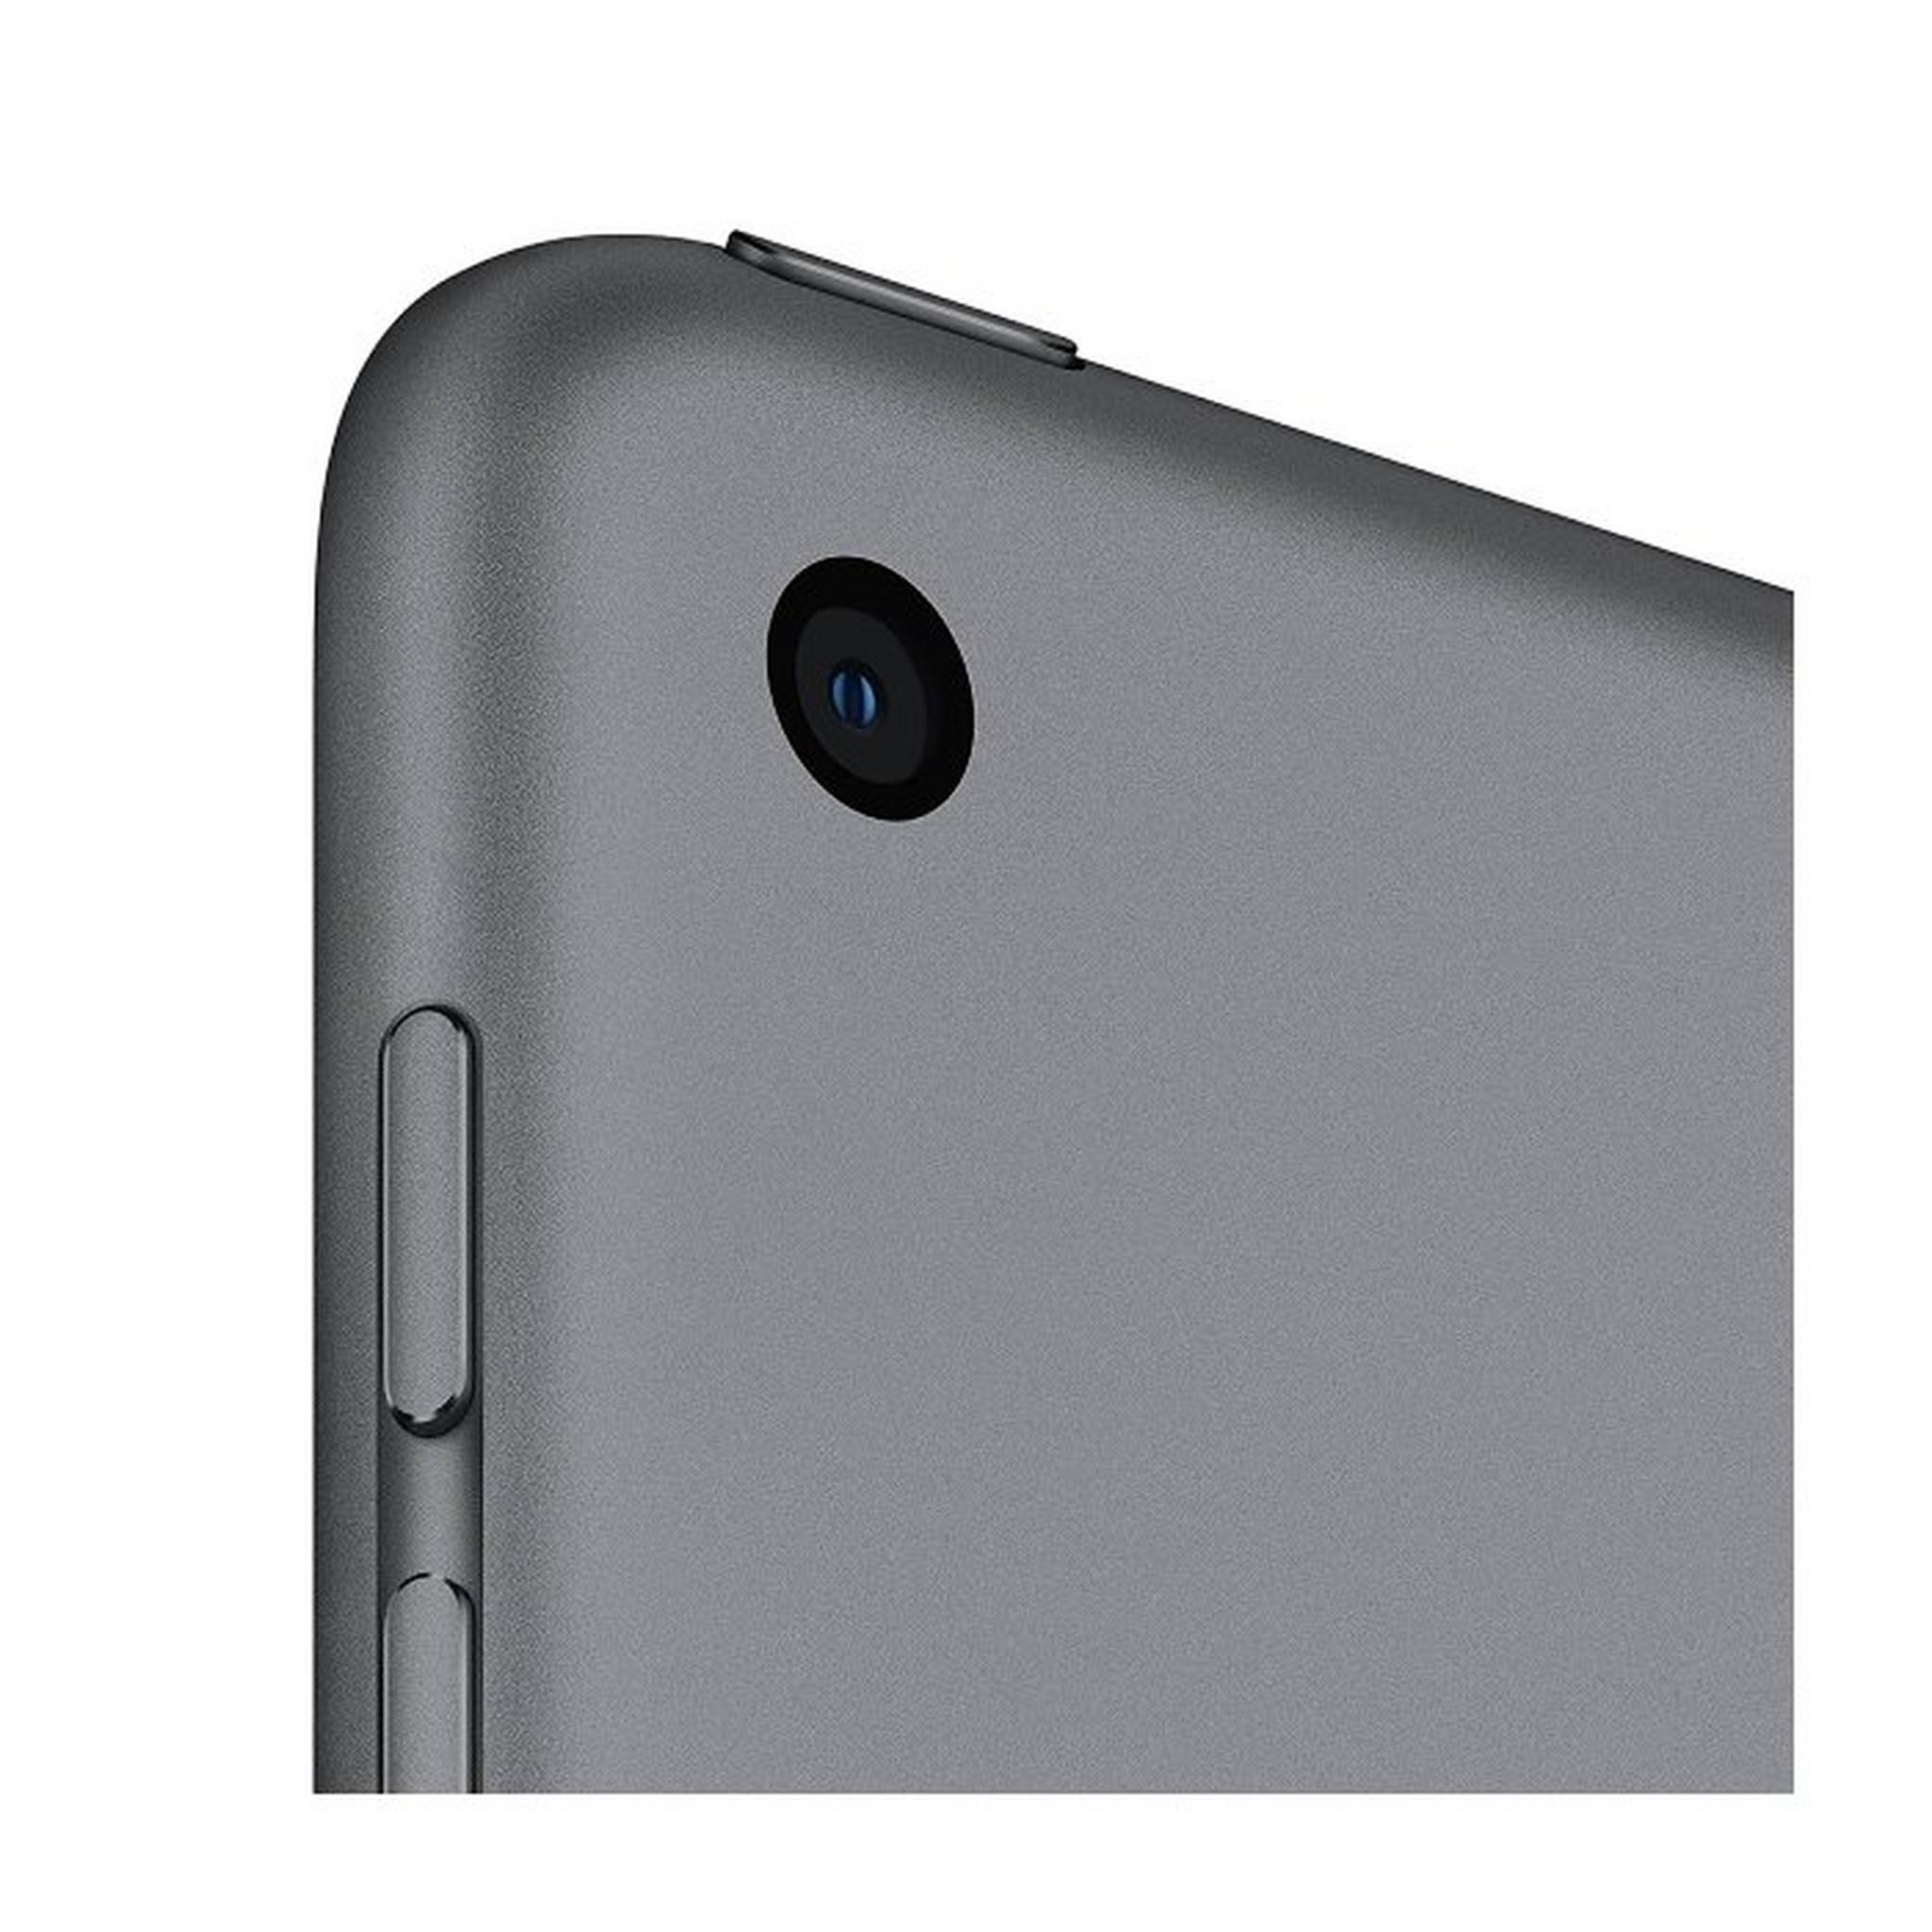 Apple iPad 8 32GB 10.2-inch 4G Tablet - Space Grey